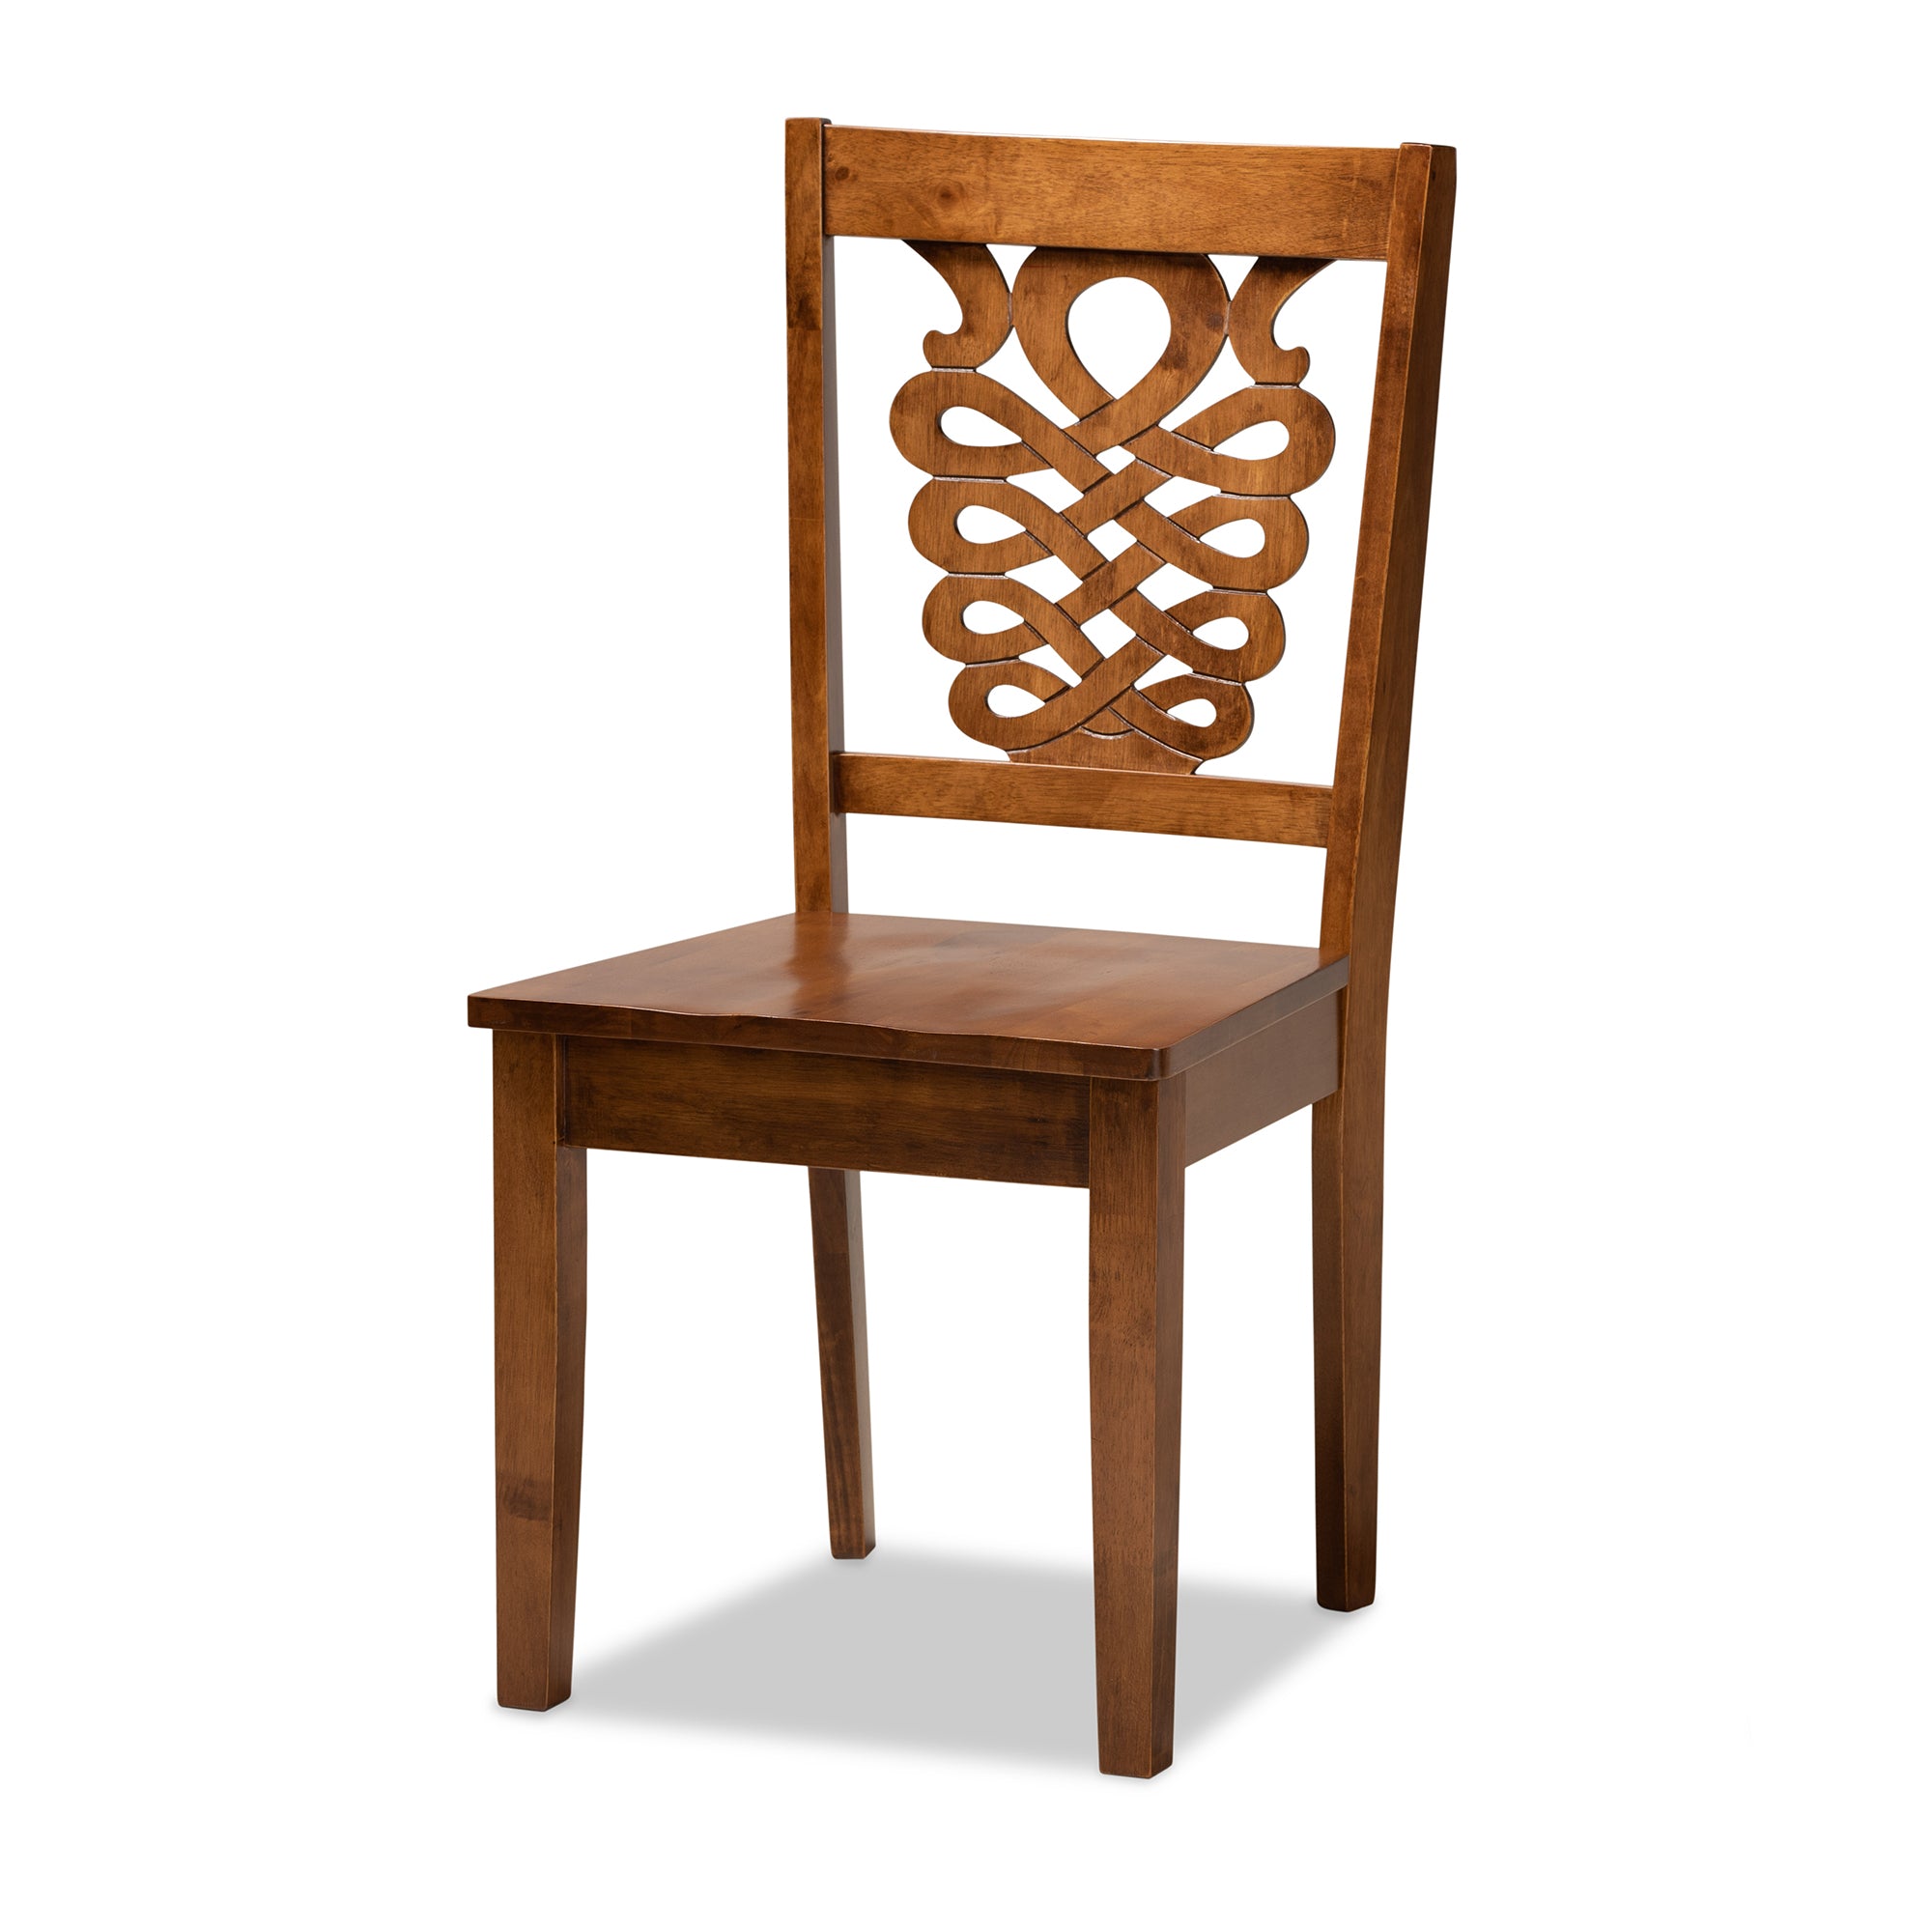 Salida Modern Dining Table & Dining Chairs 5-Piece-Dining Set-Baxton Studio - WI-Wall2Wall Furnishings